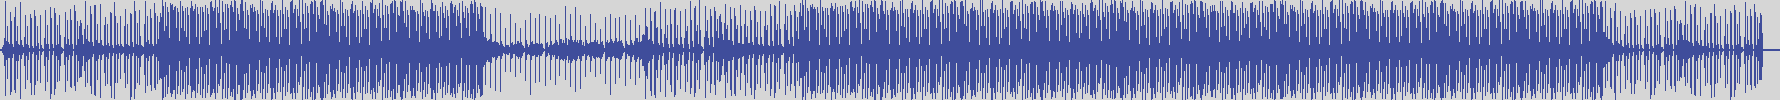 nf_boyz_records [NFY079] Glitch Beats - Arizona Sun [Horizon 4000 Mix] audio wave form